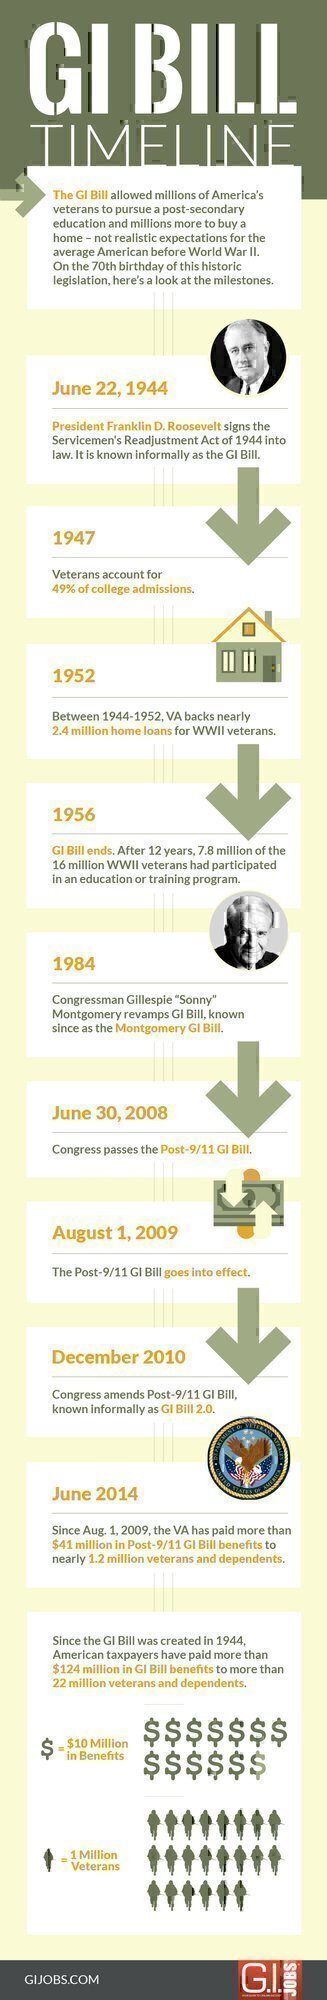 GI Bill Timeline